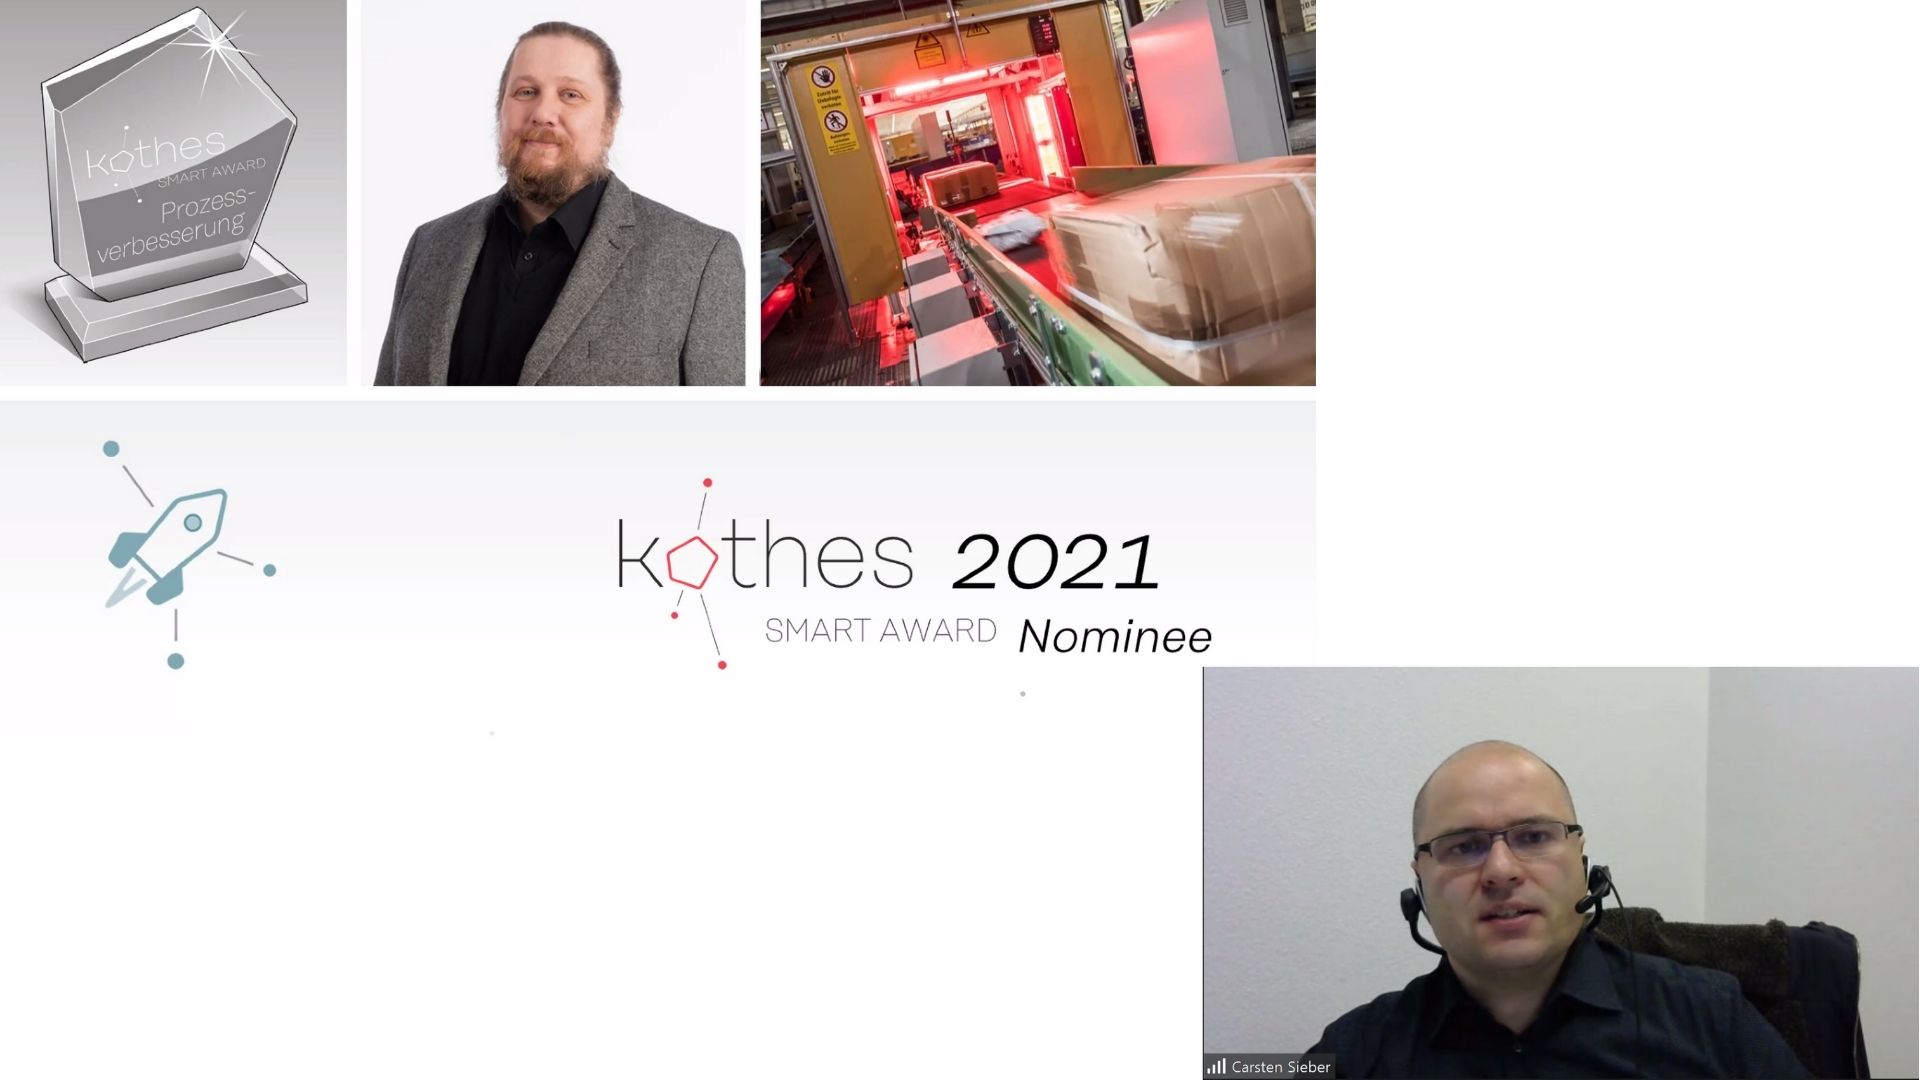 The kothes 2021 smart award